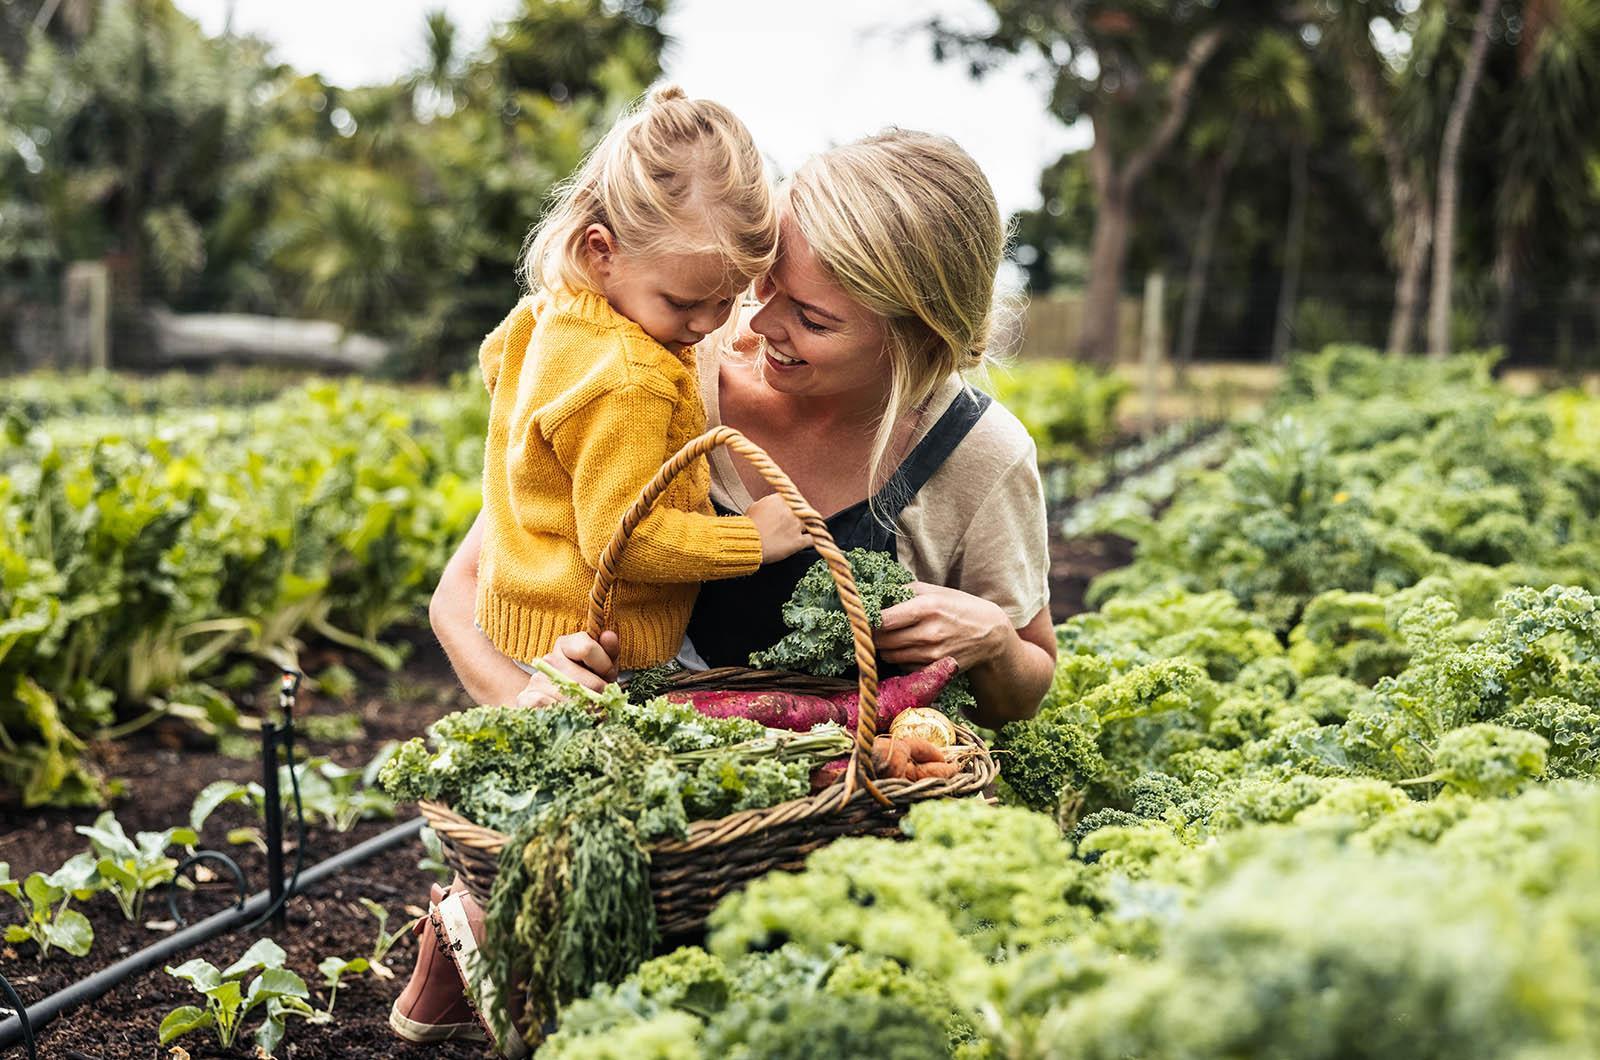 mom and daughter in vegetable garden